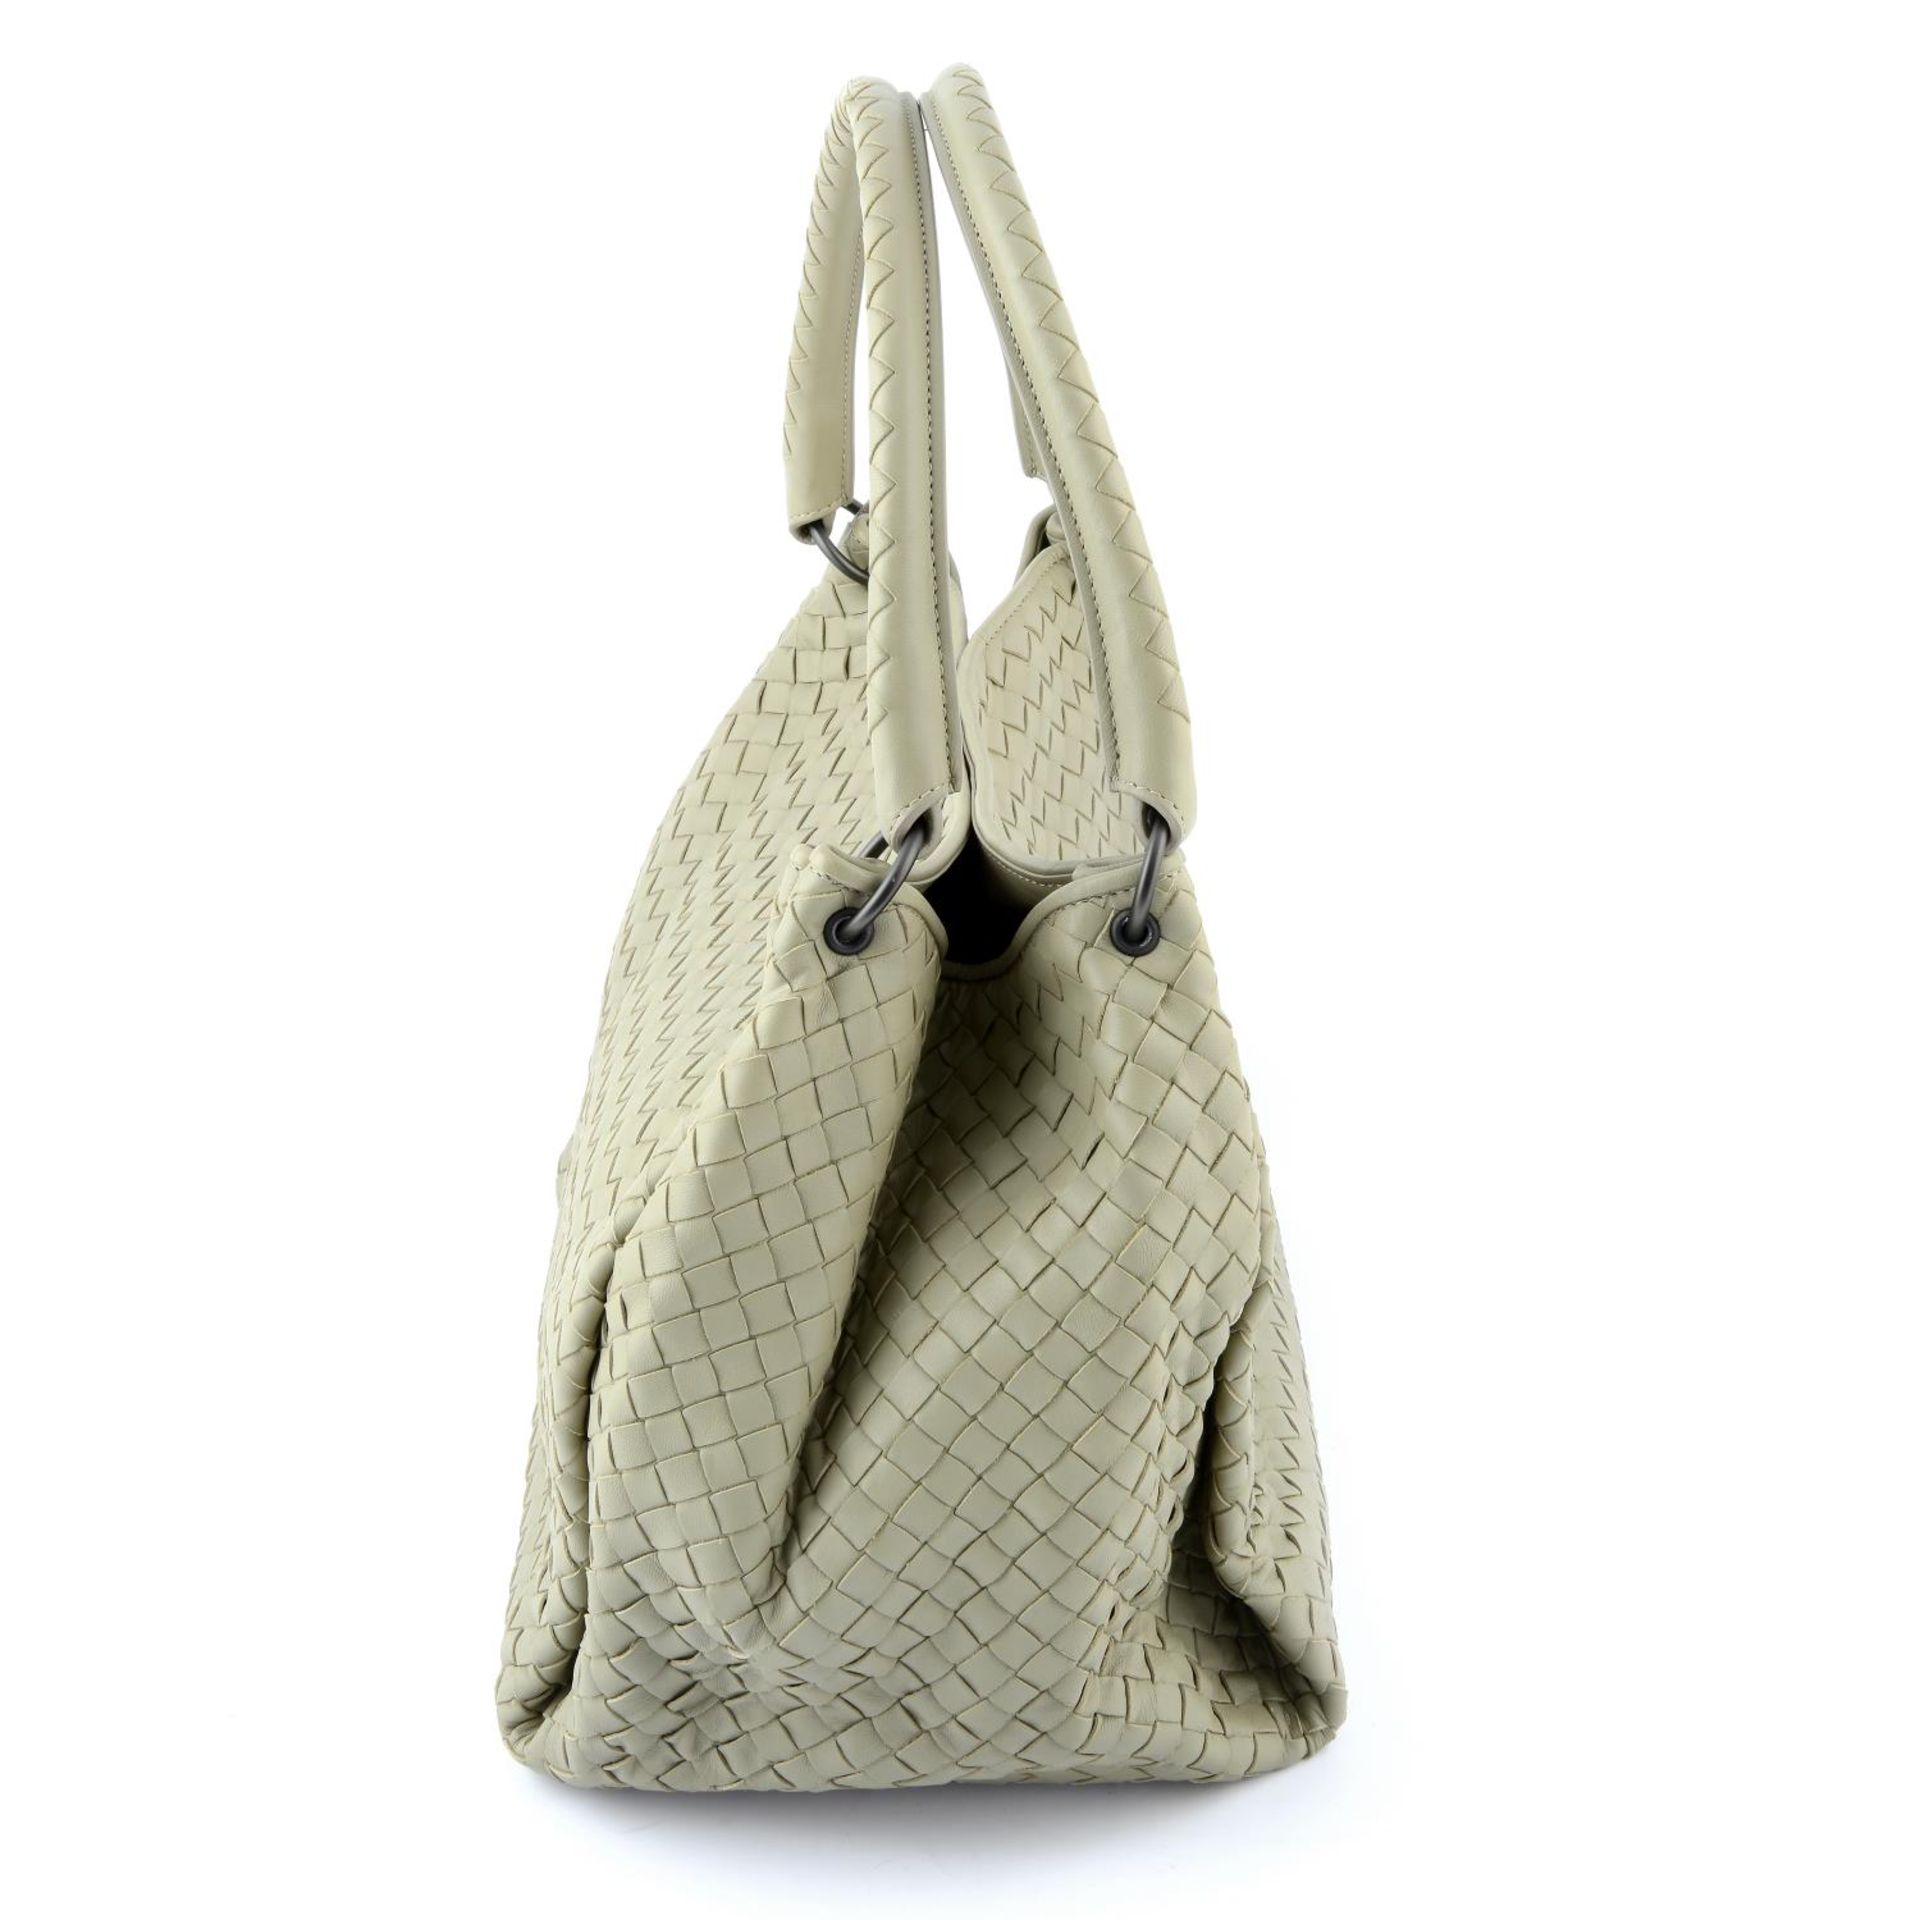 BOTTEGA VENETA - an Intrecciato top handle handbag. - Image 4 of 5